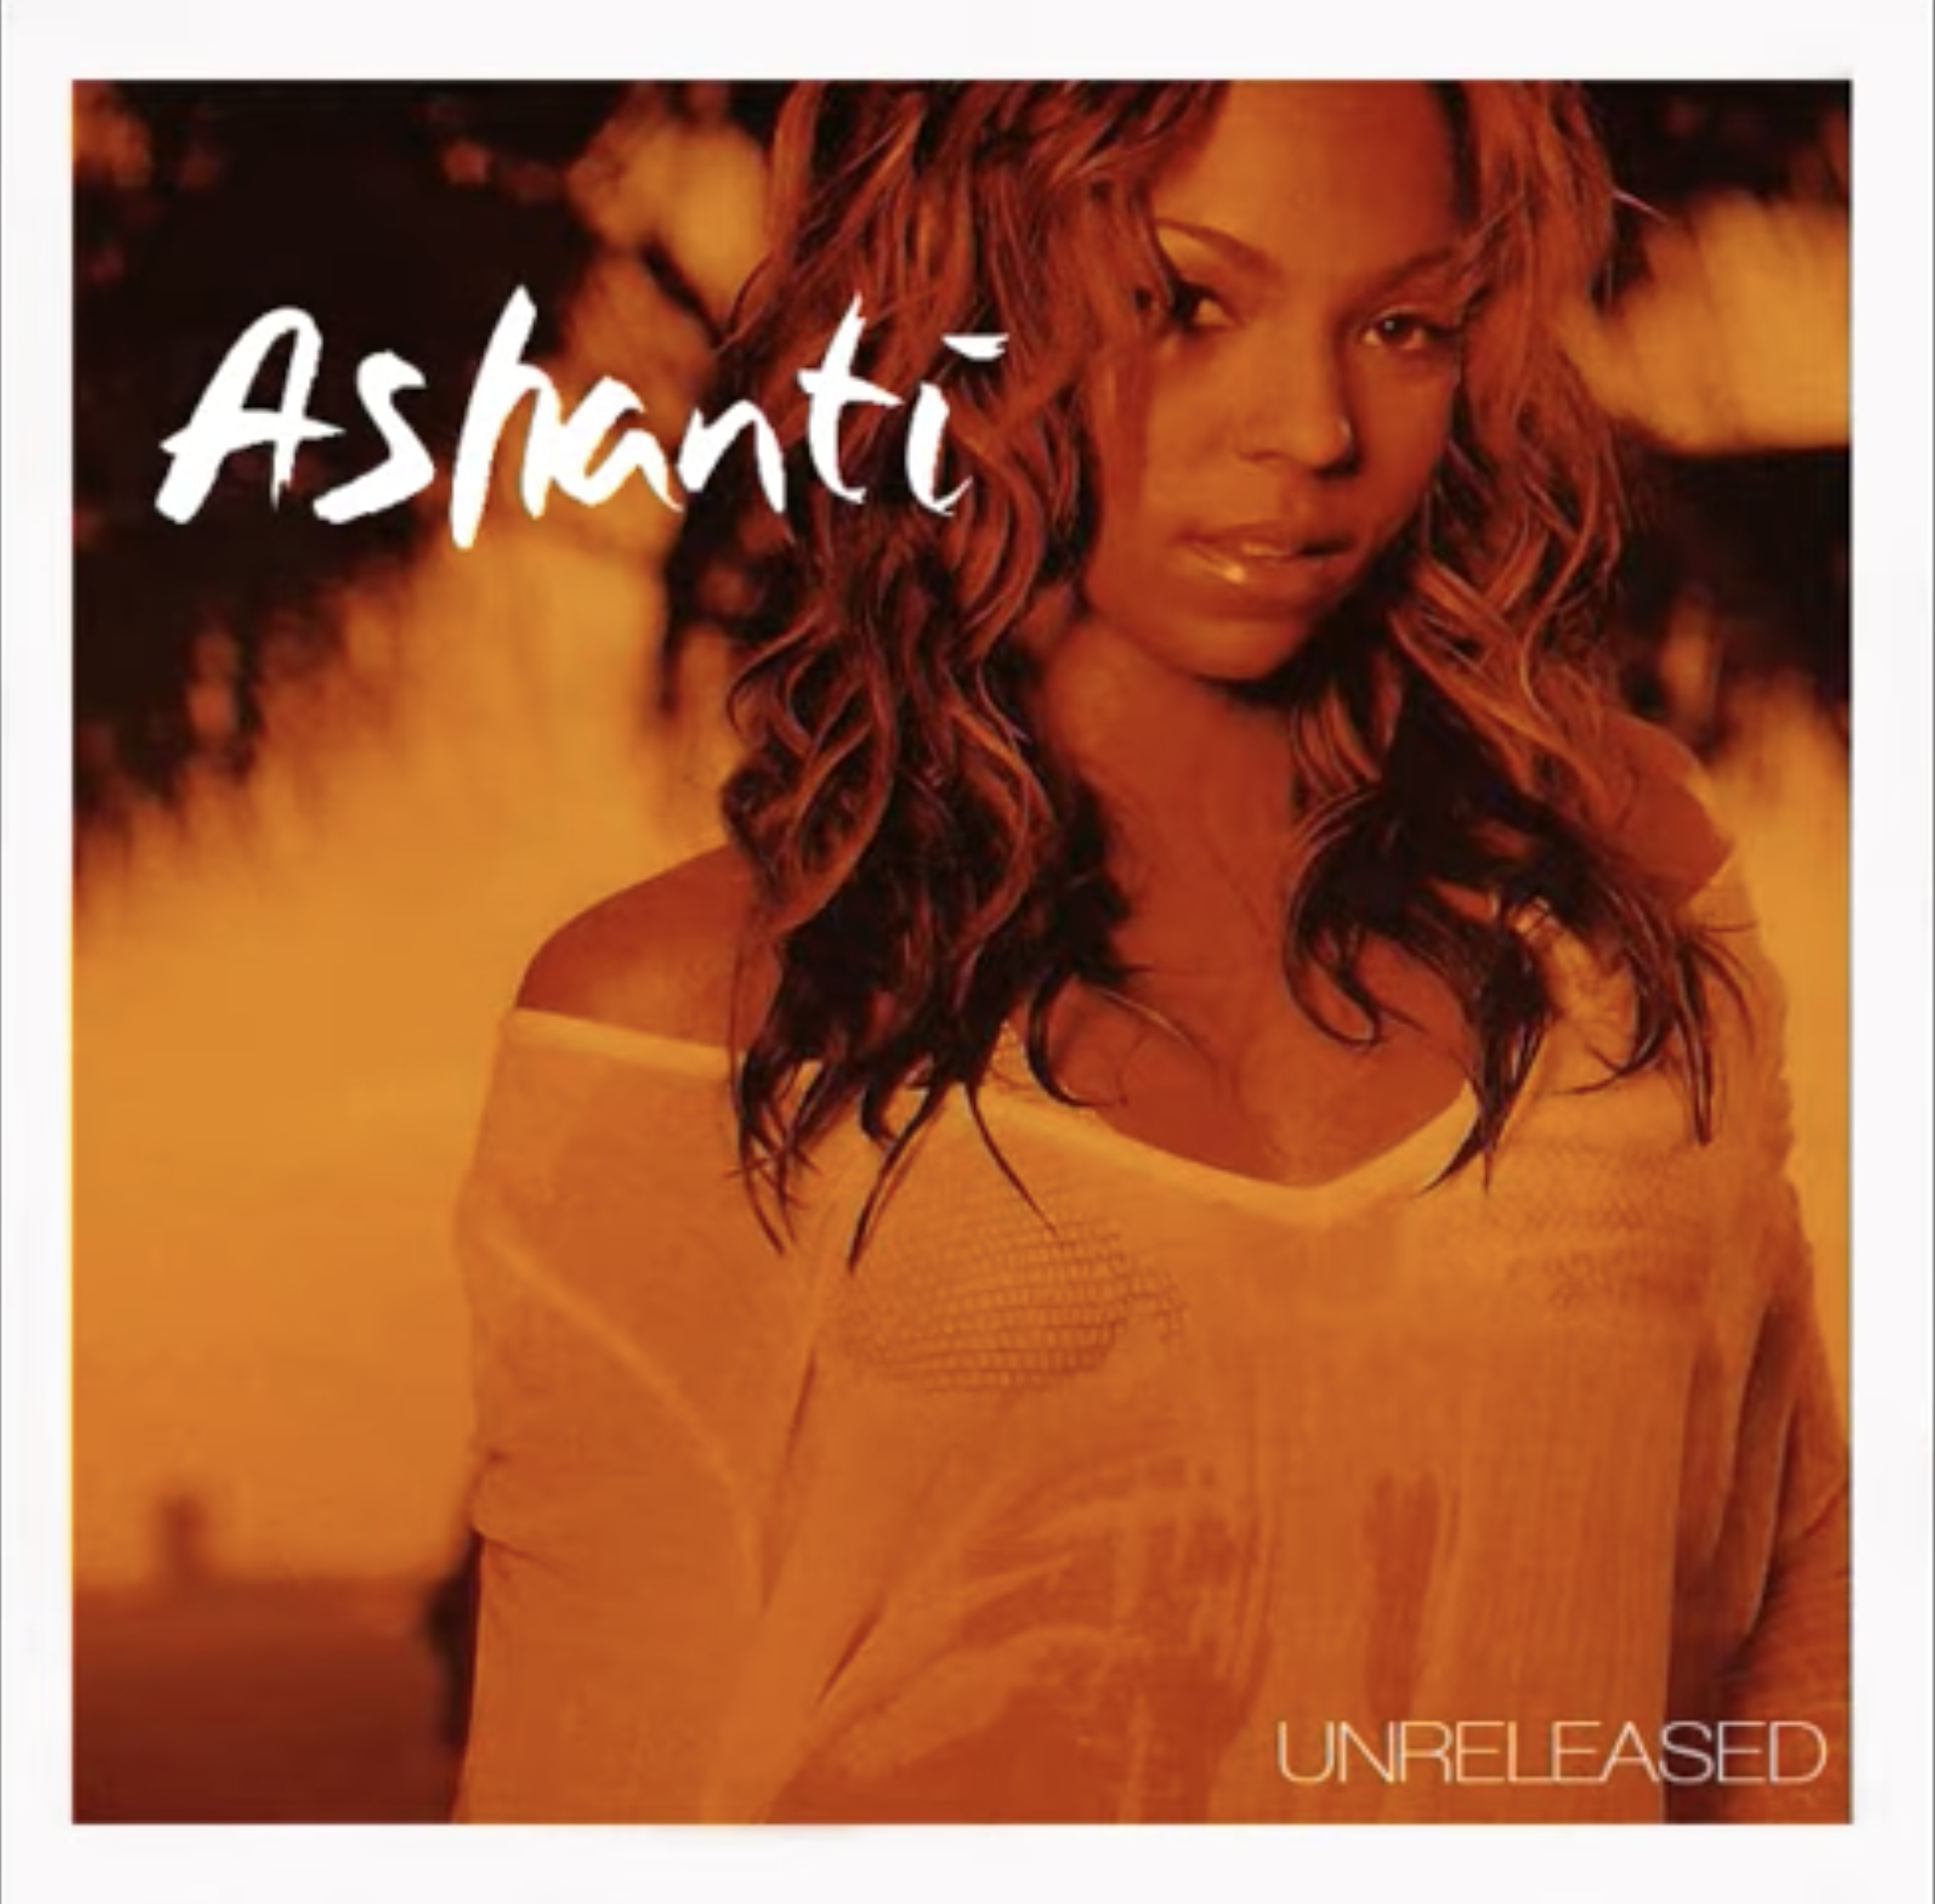 Ashanti Unreleased cover artwork